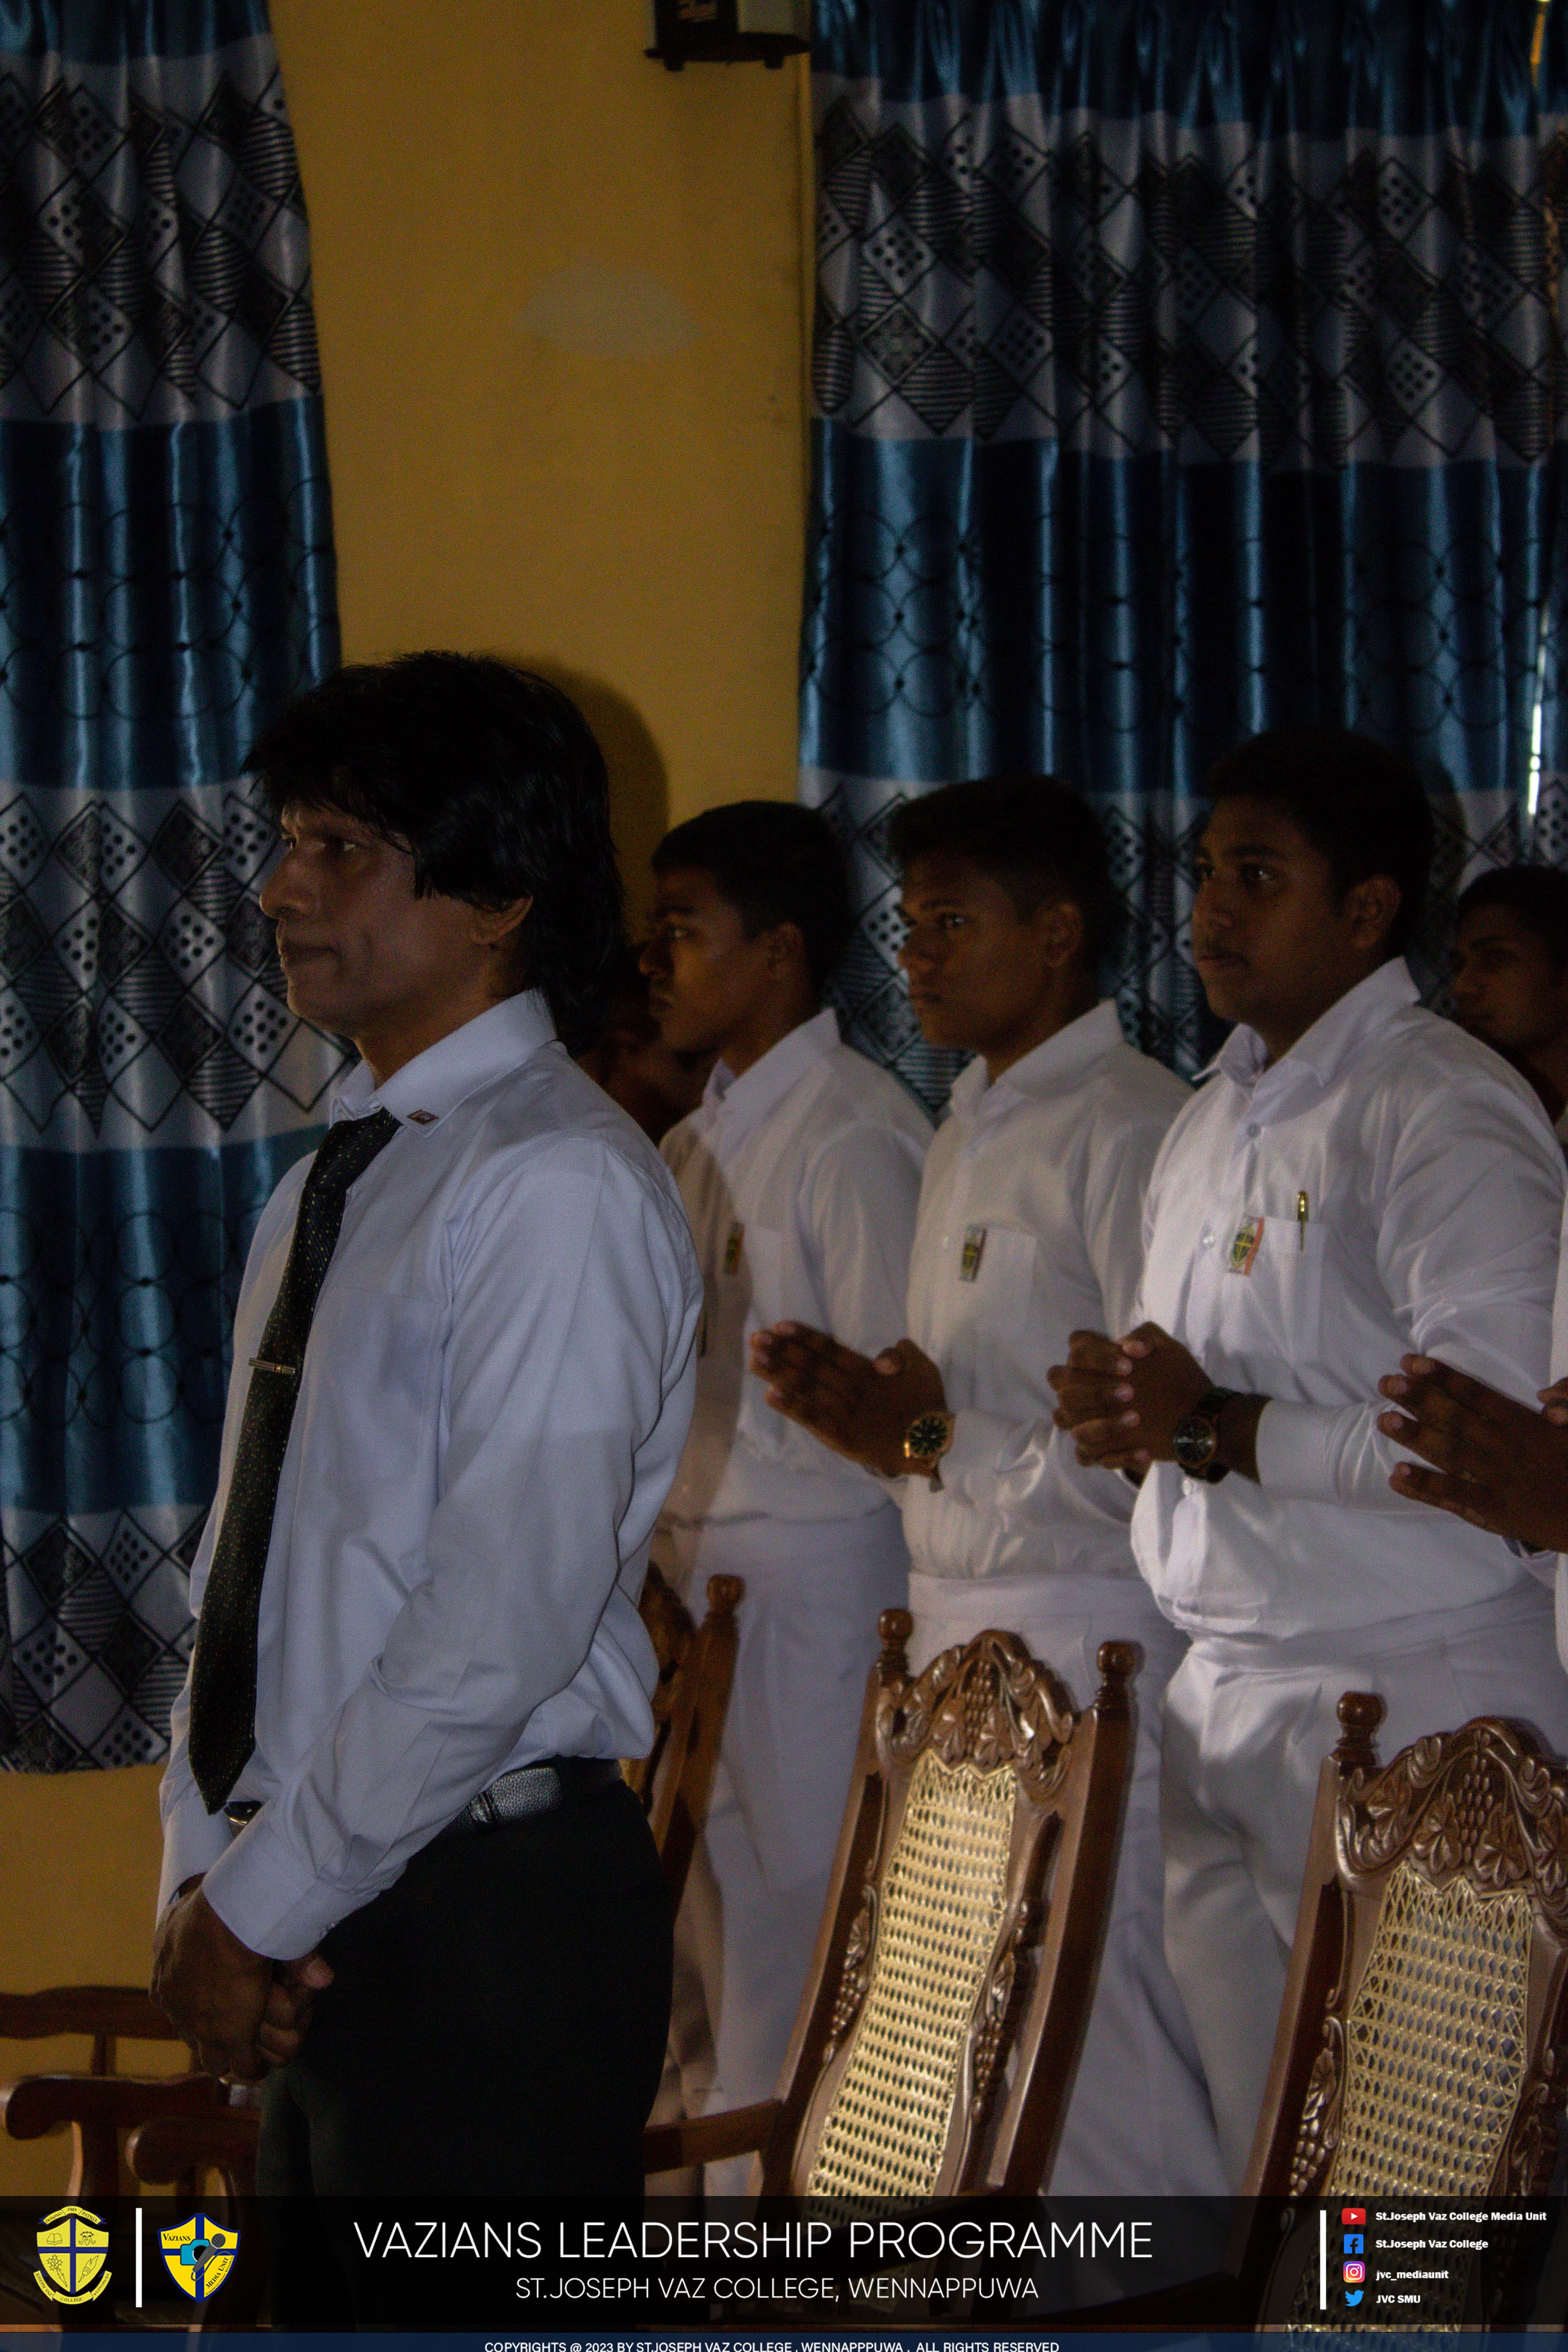 Vazians Leadership Programme - St. Joseph Vaz College - Wennappuwa - Sri Lanka